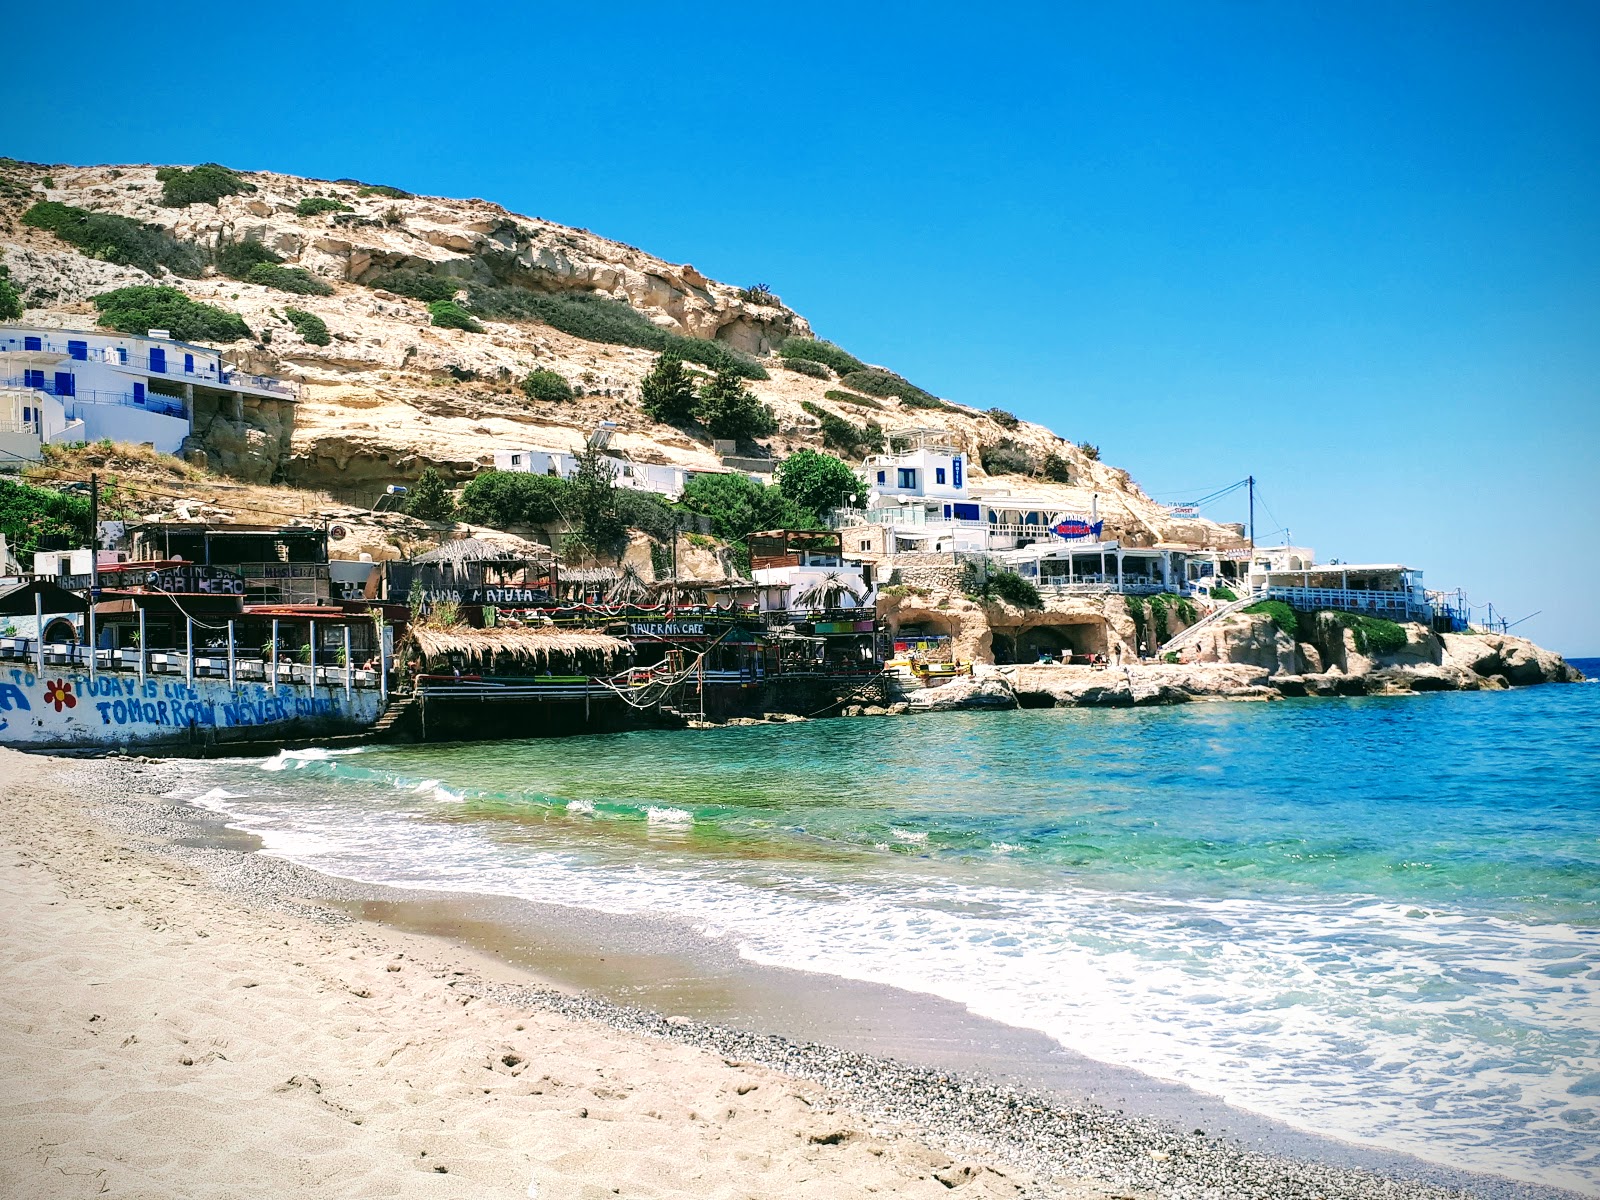 Photo of Matala beach and its beautiful scenery